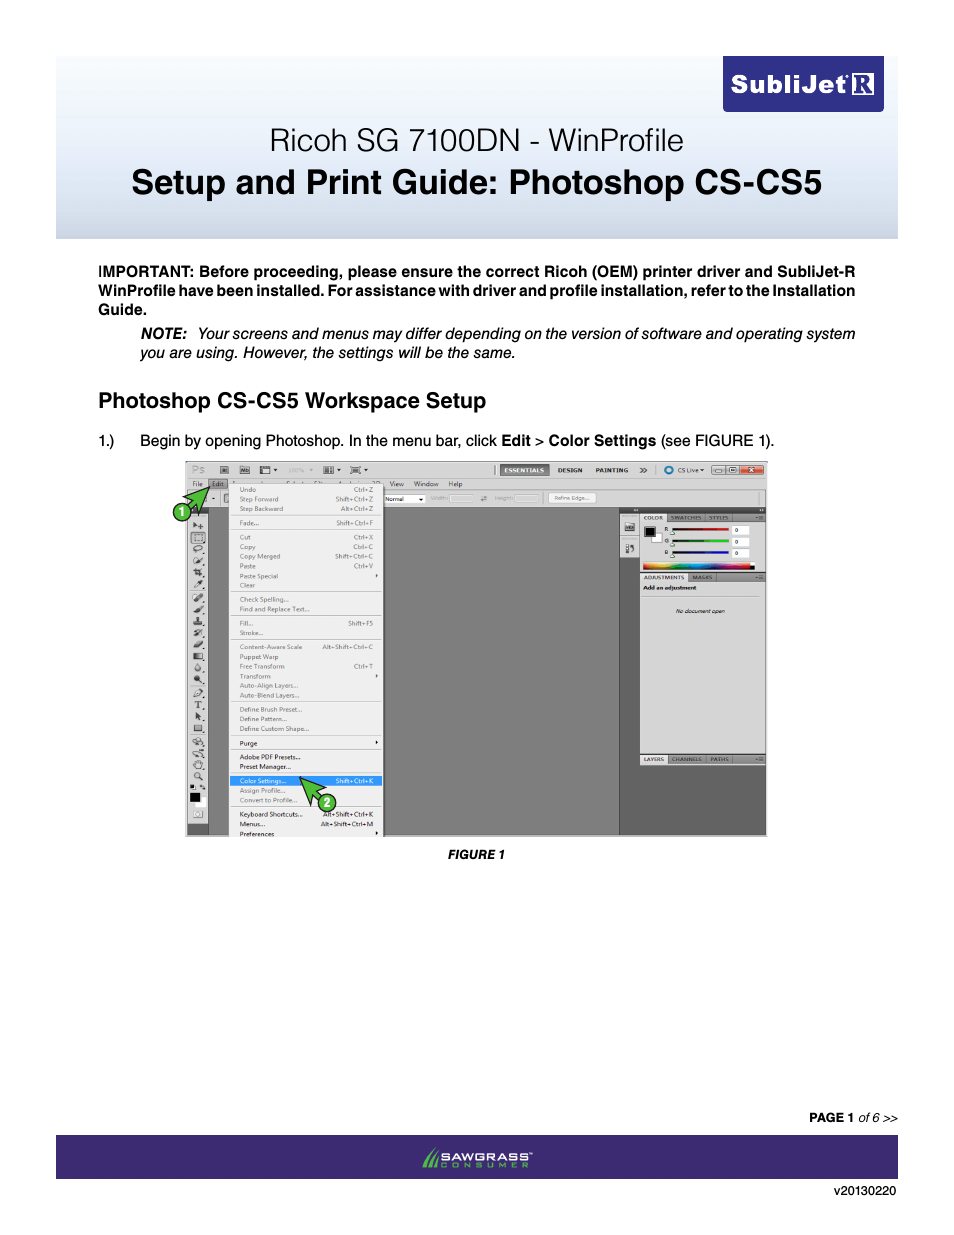 SubliJet R Ricoh SG7100DN (Windows ICC Profile Setup): Print & Setup Guide Adobe Photoshop CS - CS5